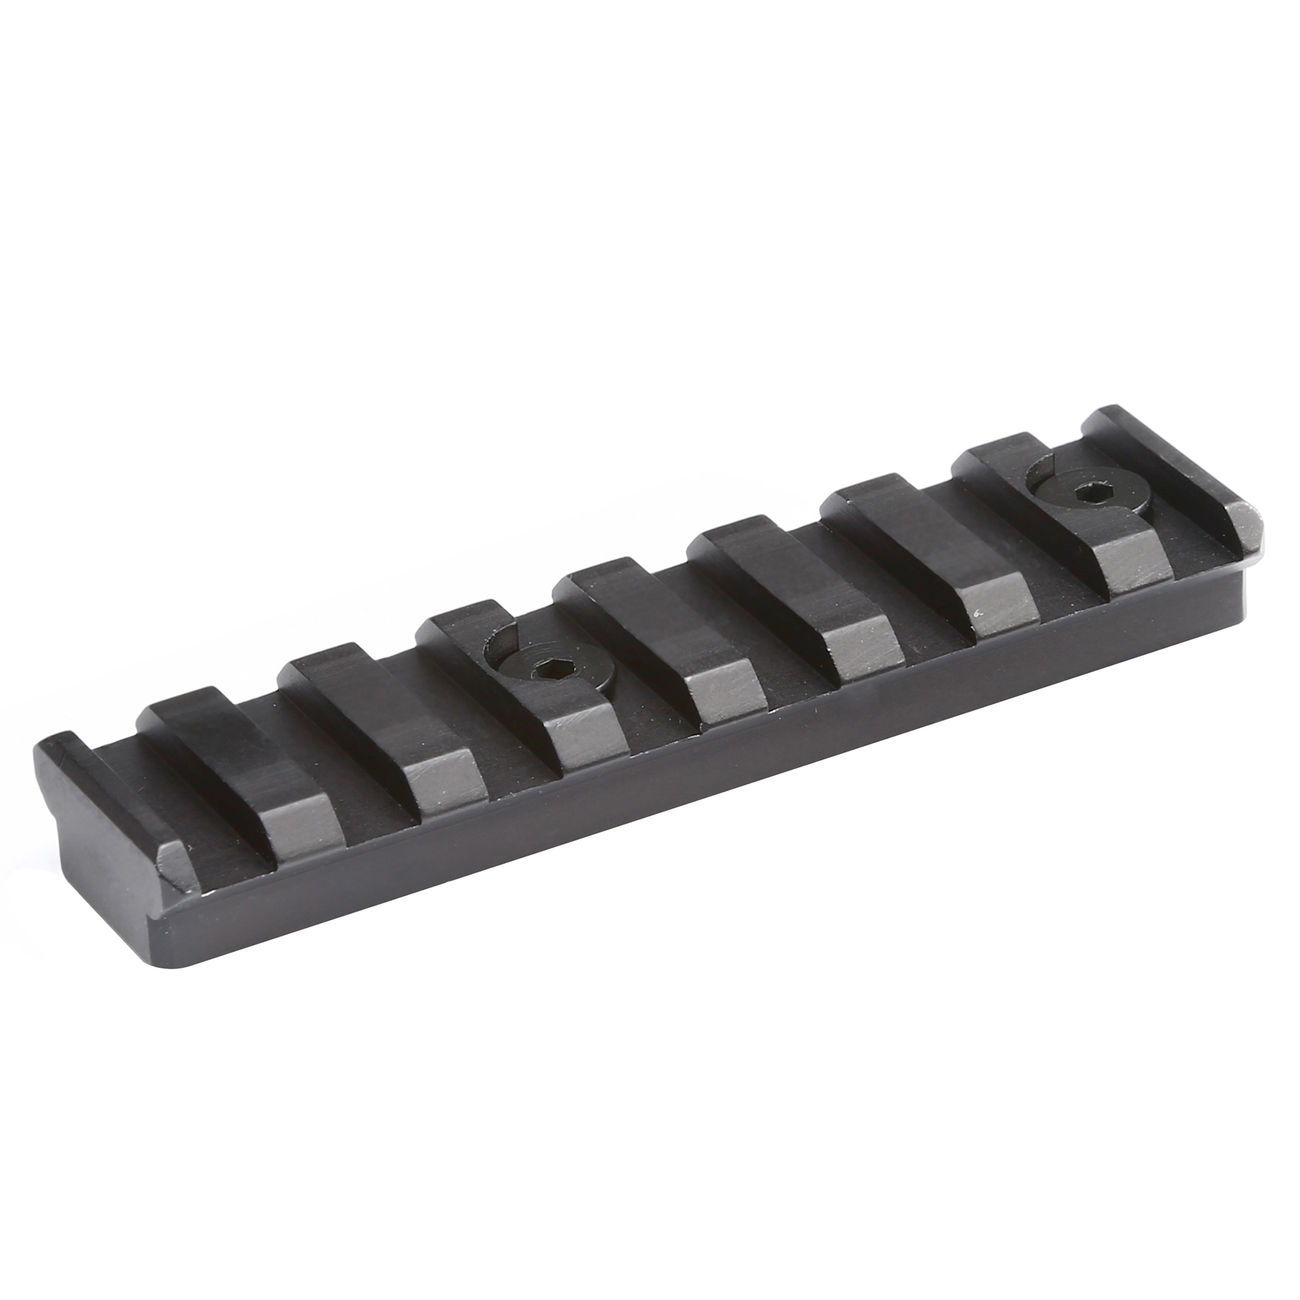 UTG Pro KeyMod 21mm Aluminium Schiene 8 Slots / 80 mm / 3.14 Zoll schwarz